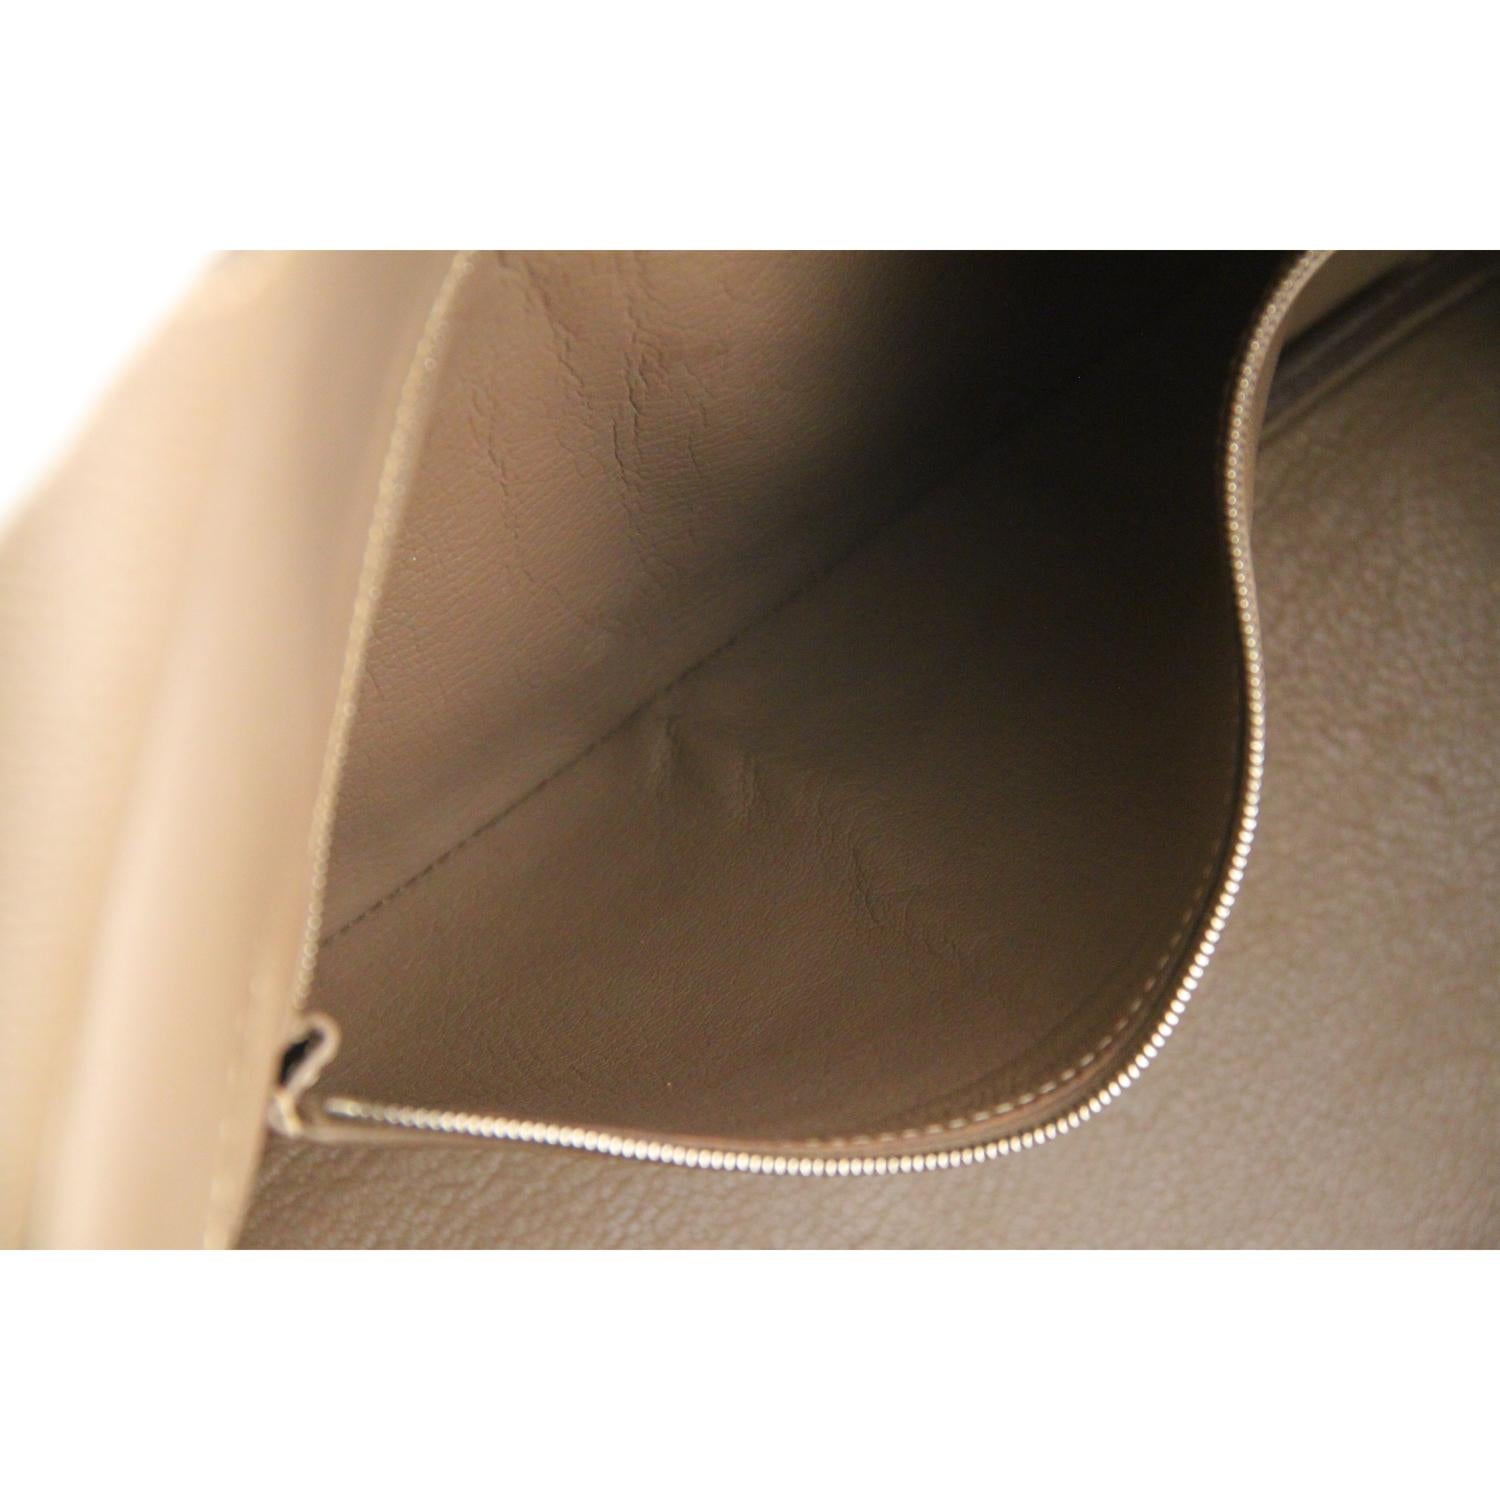 Hermes Taupe Togo Leather Birkin 35 Top Handle Bag Satchel 6